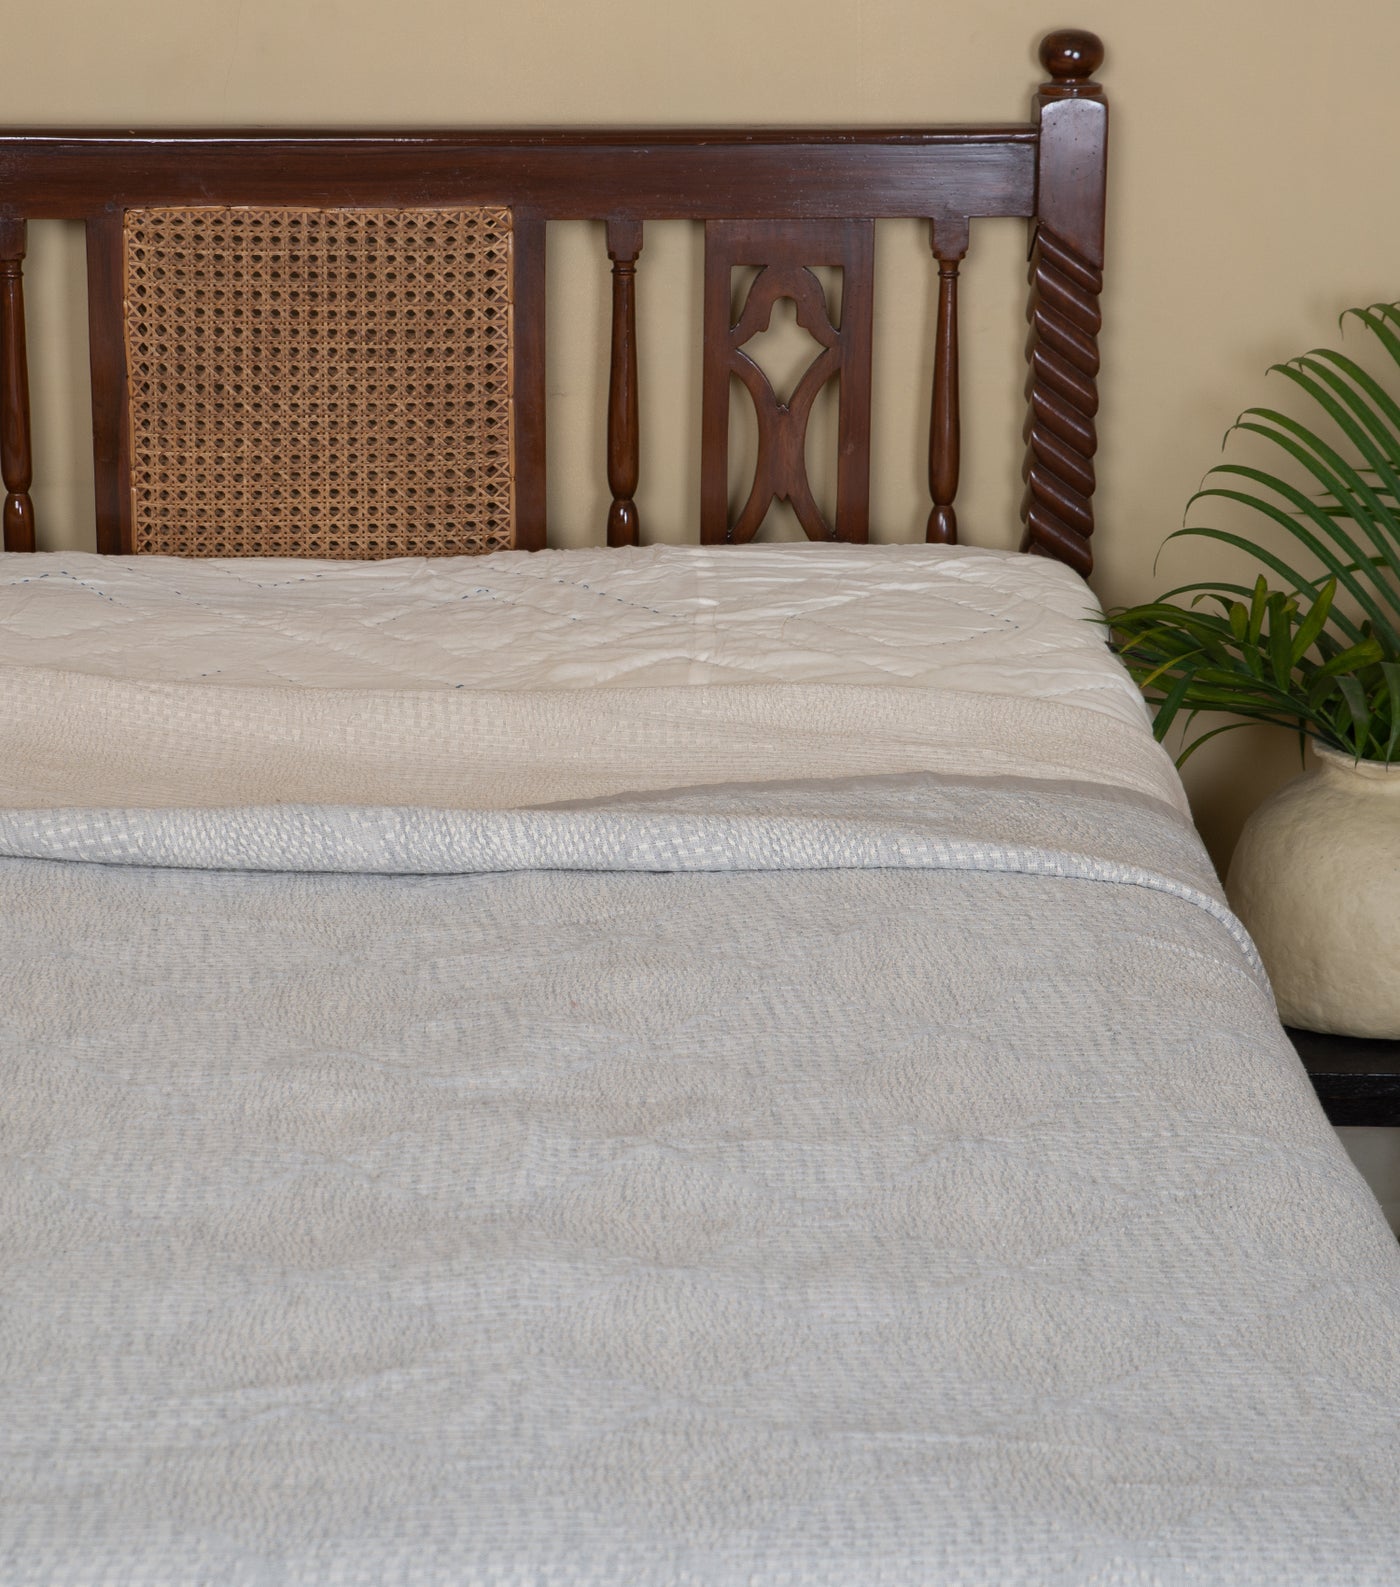 Grey Handwoven Cotton Bedcover